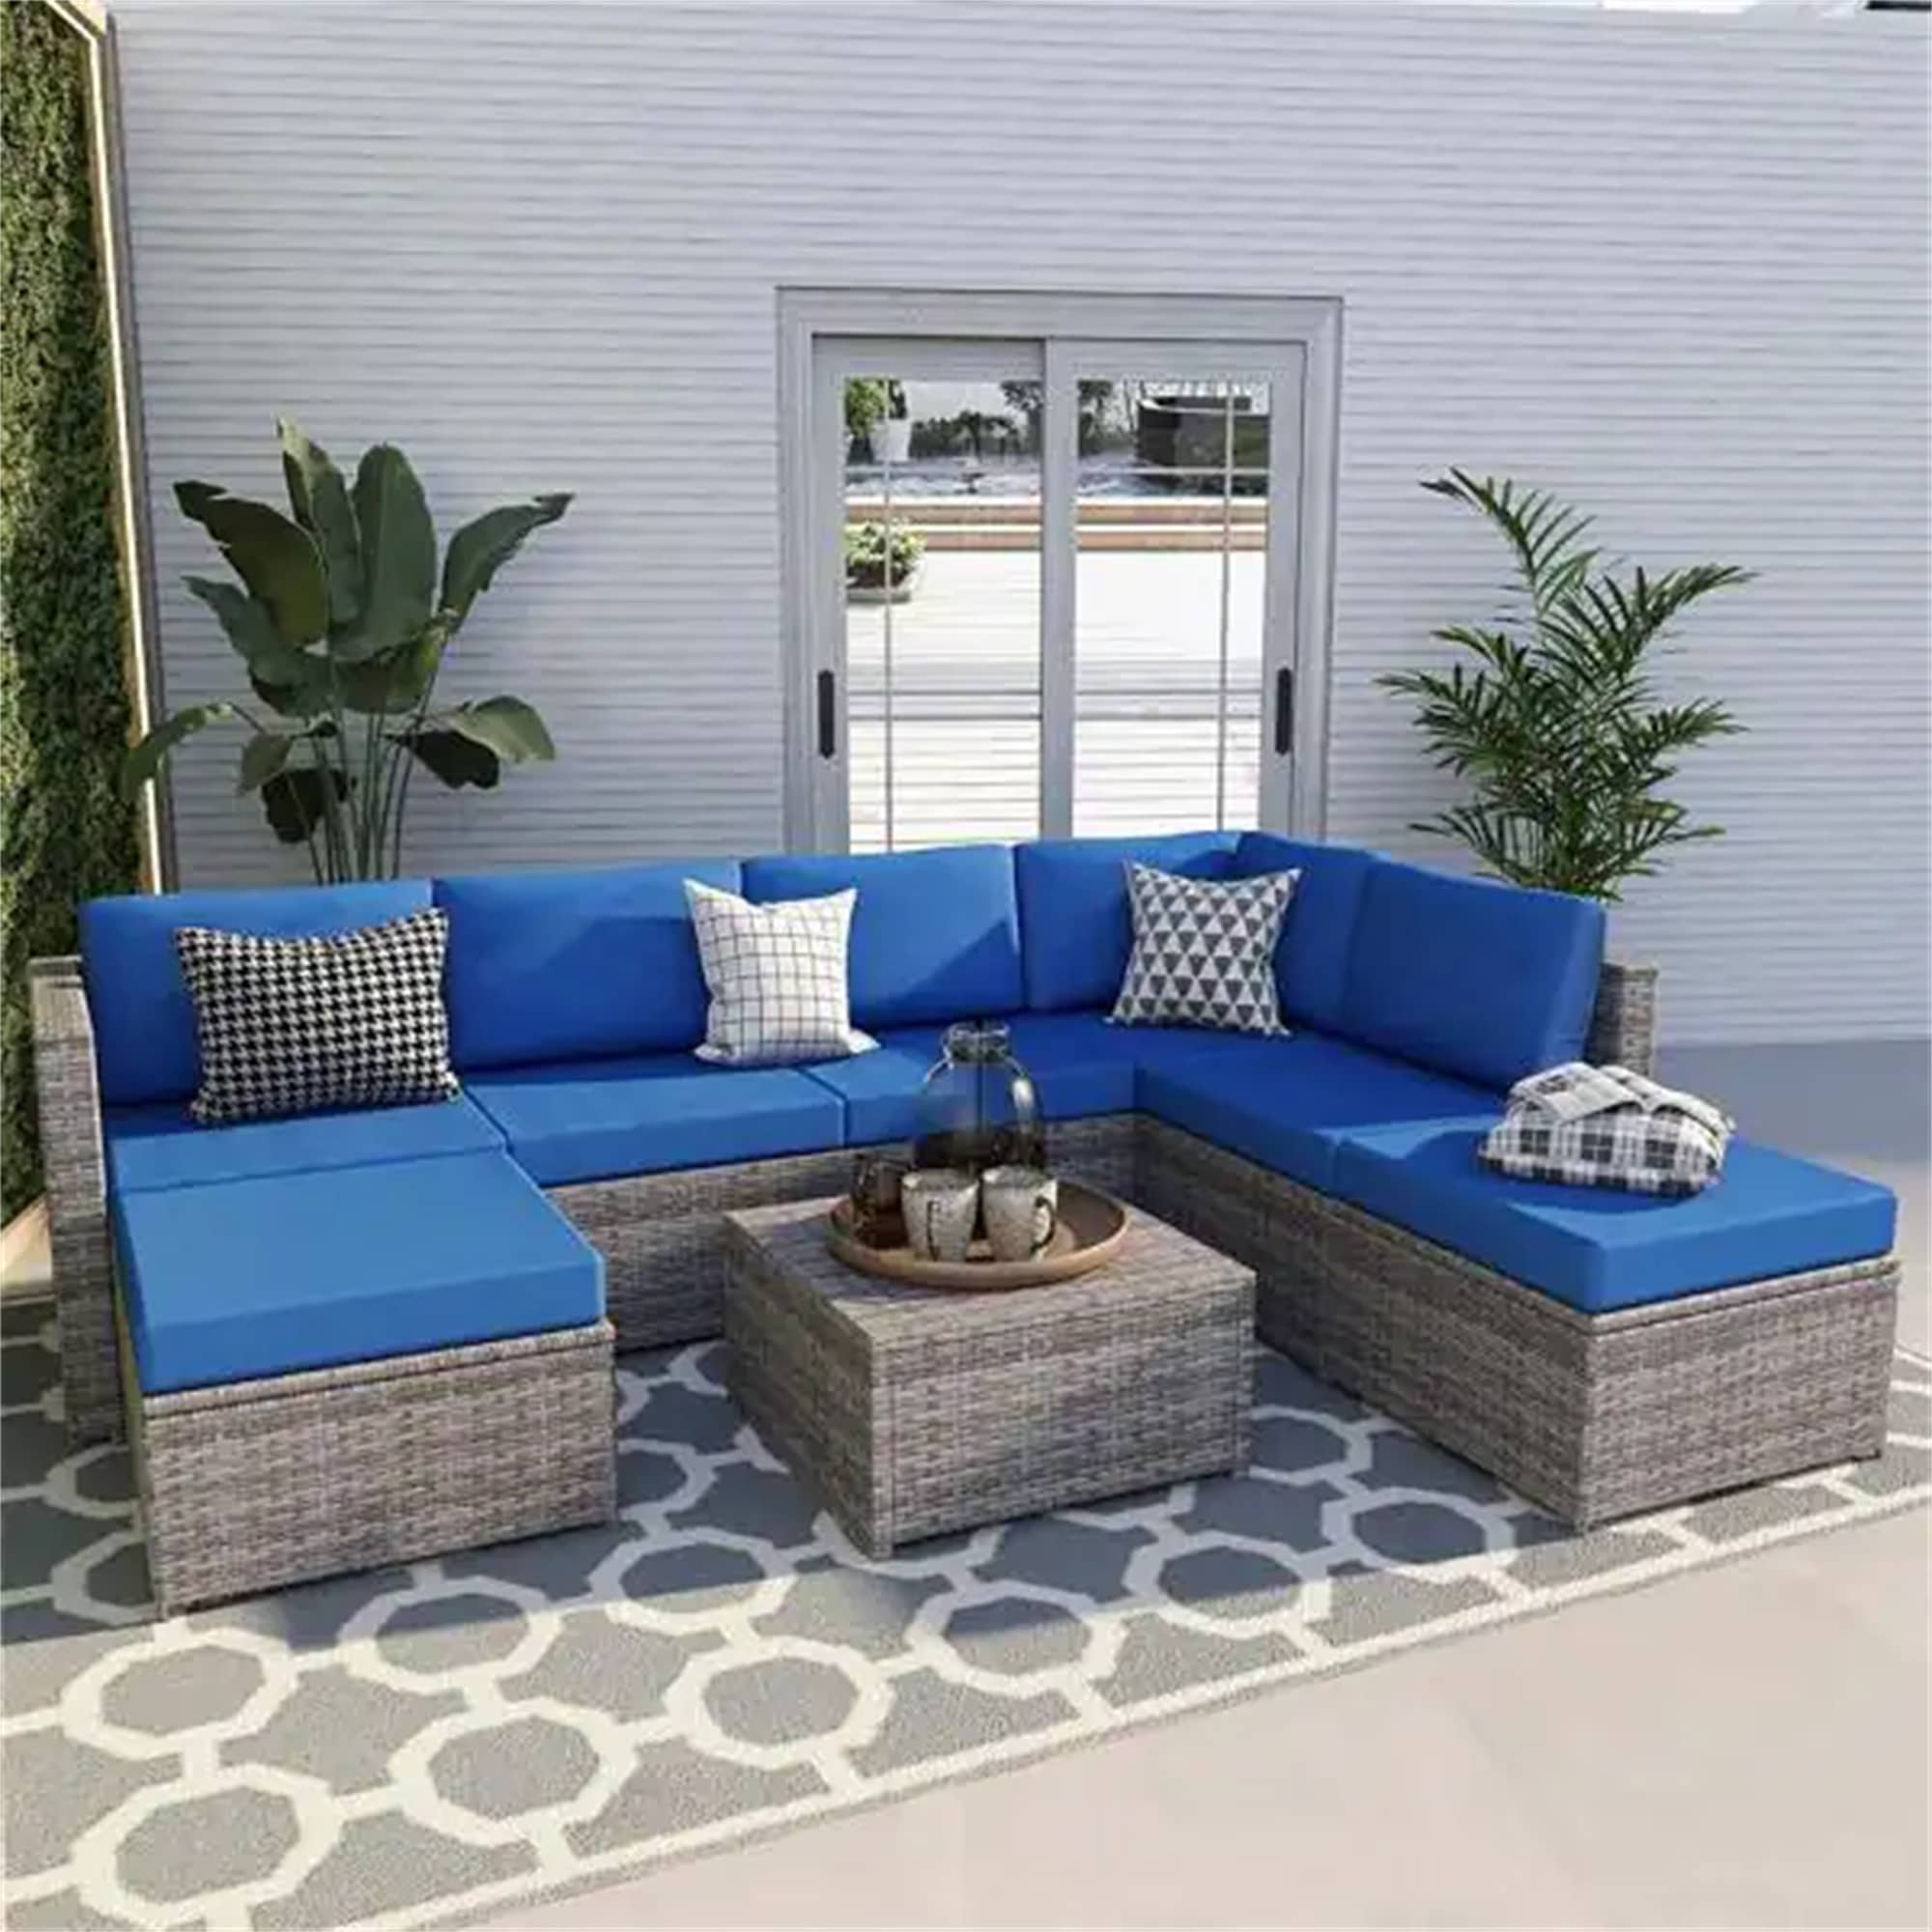 CASAINC Outdoor Sectional Wicker Rattan Sofa Set with Cushion